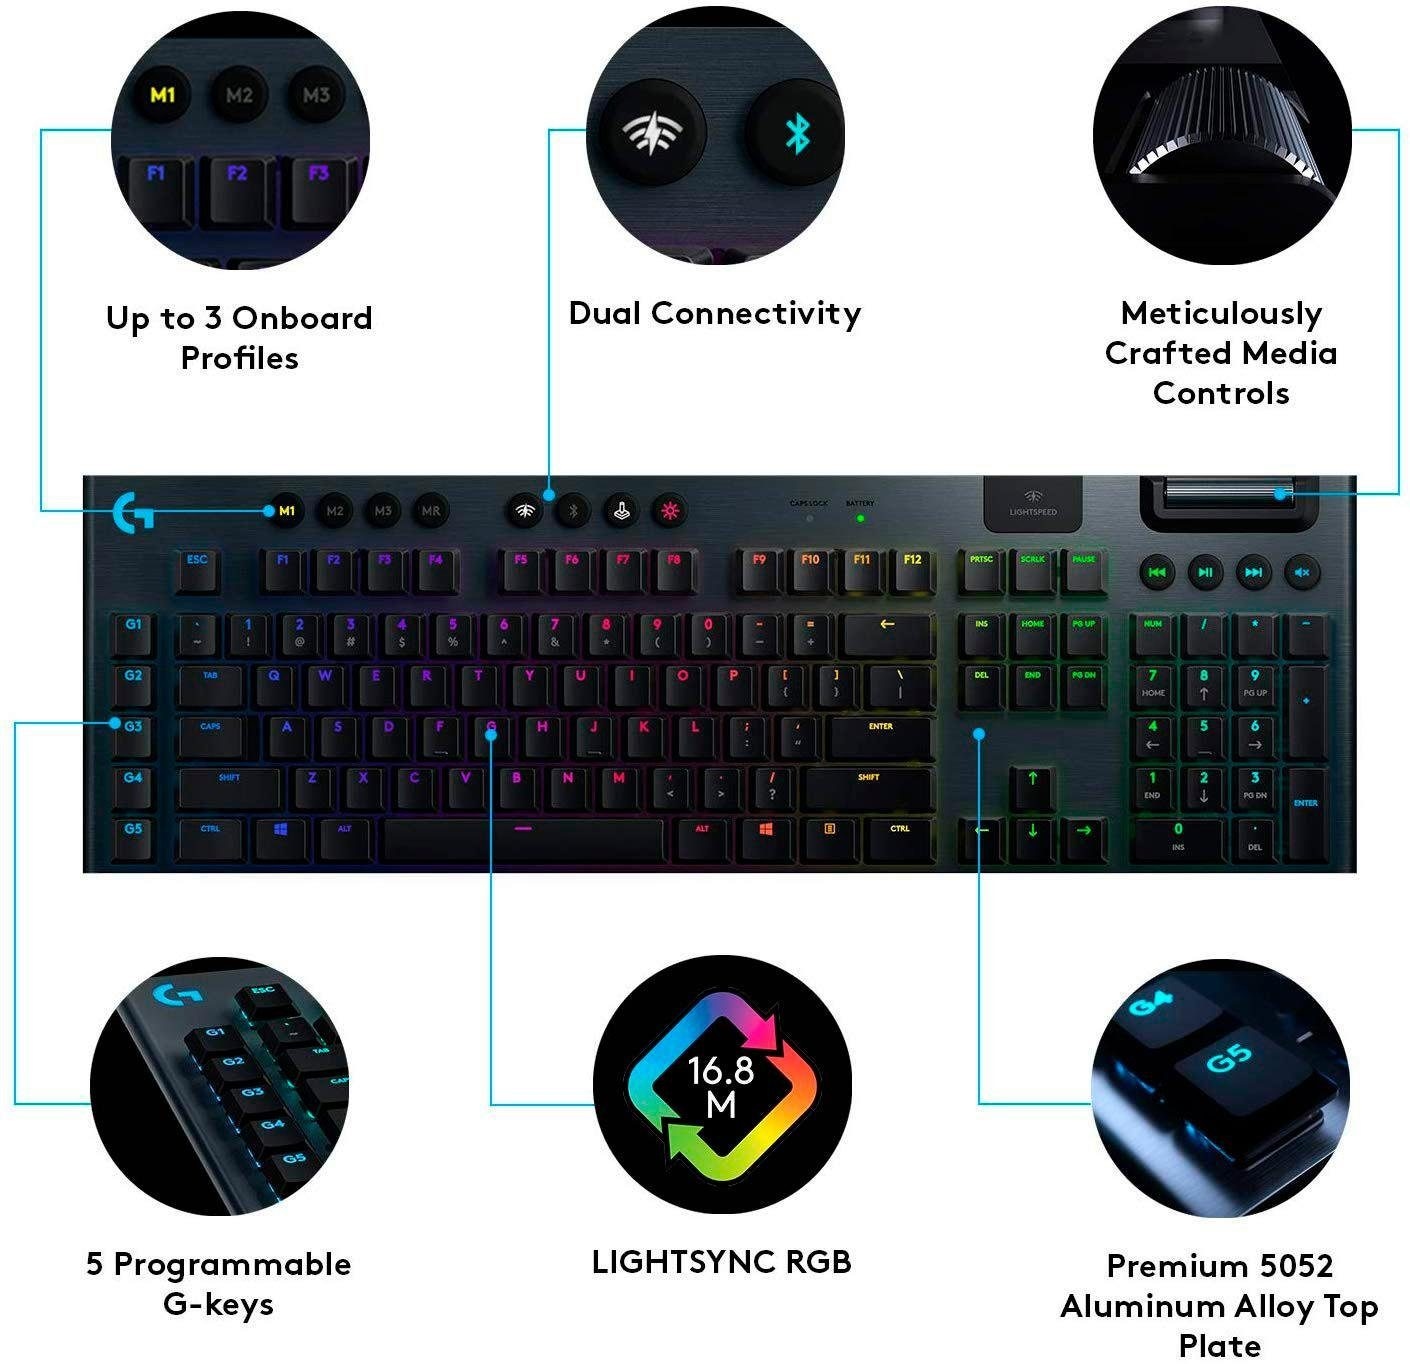 Logitech G Gaming-Tastatur »G915 LIGHTSPEED«, (USB-Anschluss-Ziffernblock-Multimedia-Tasten)